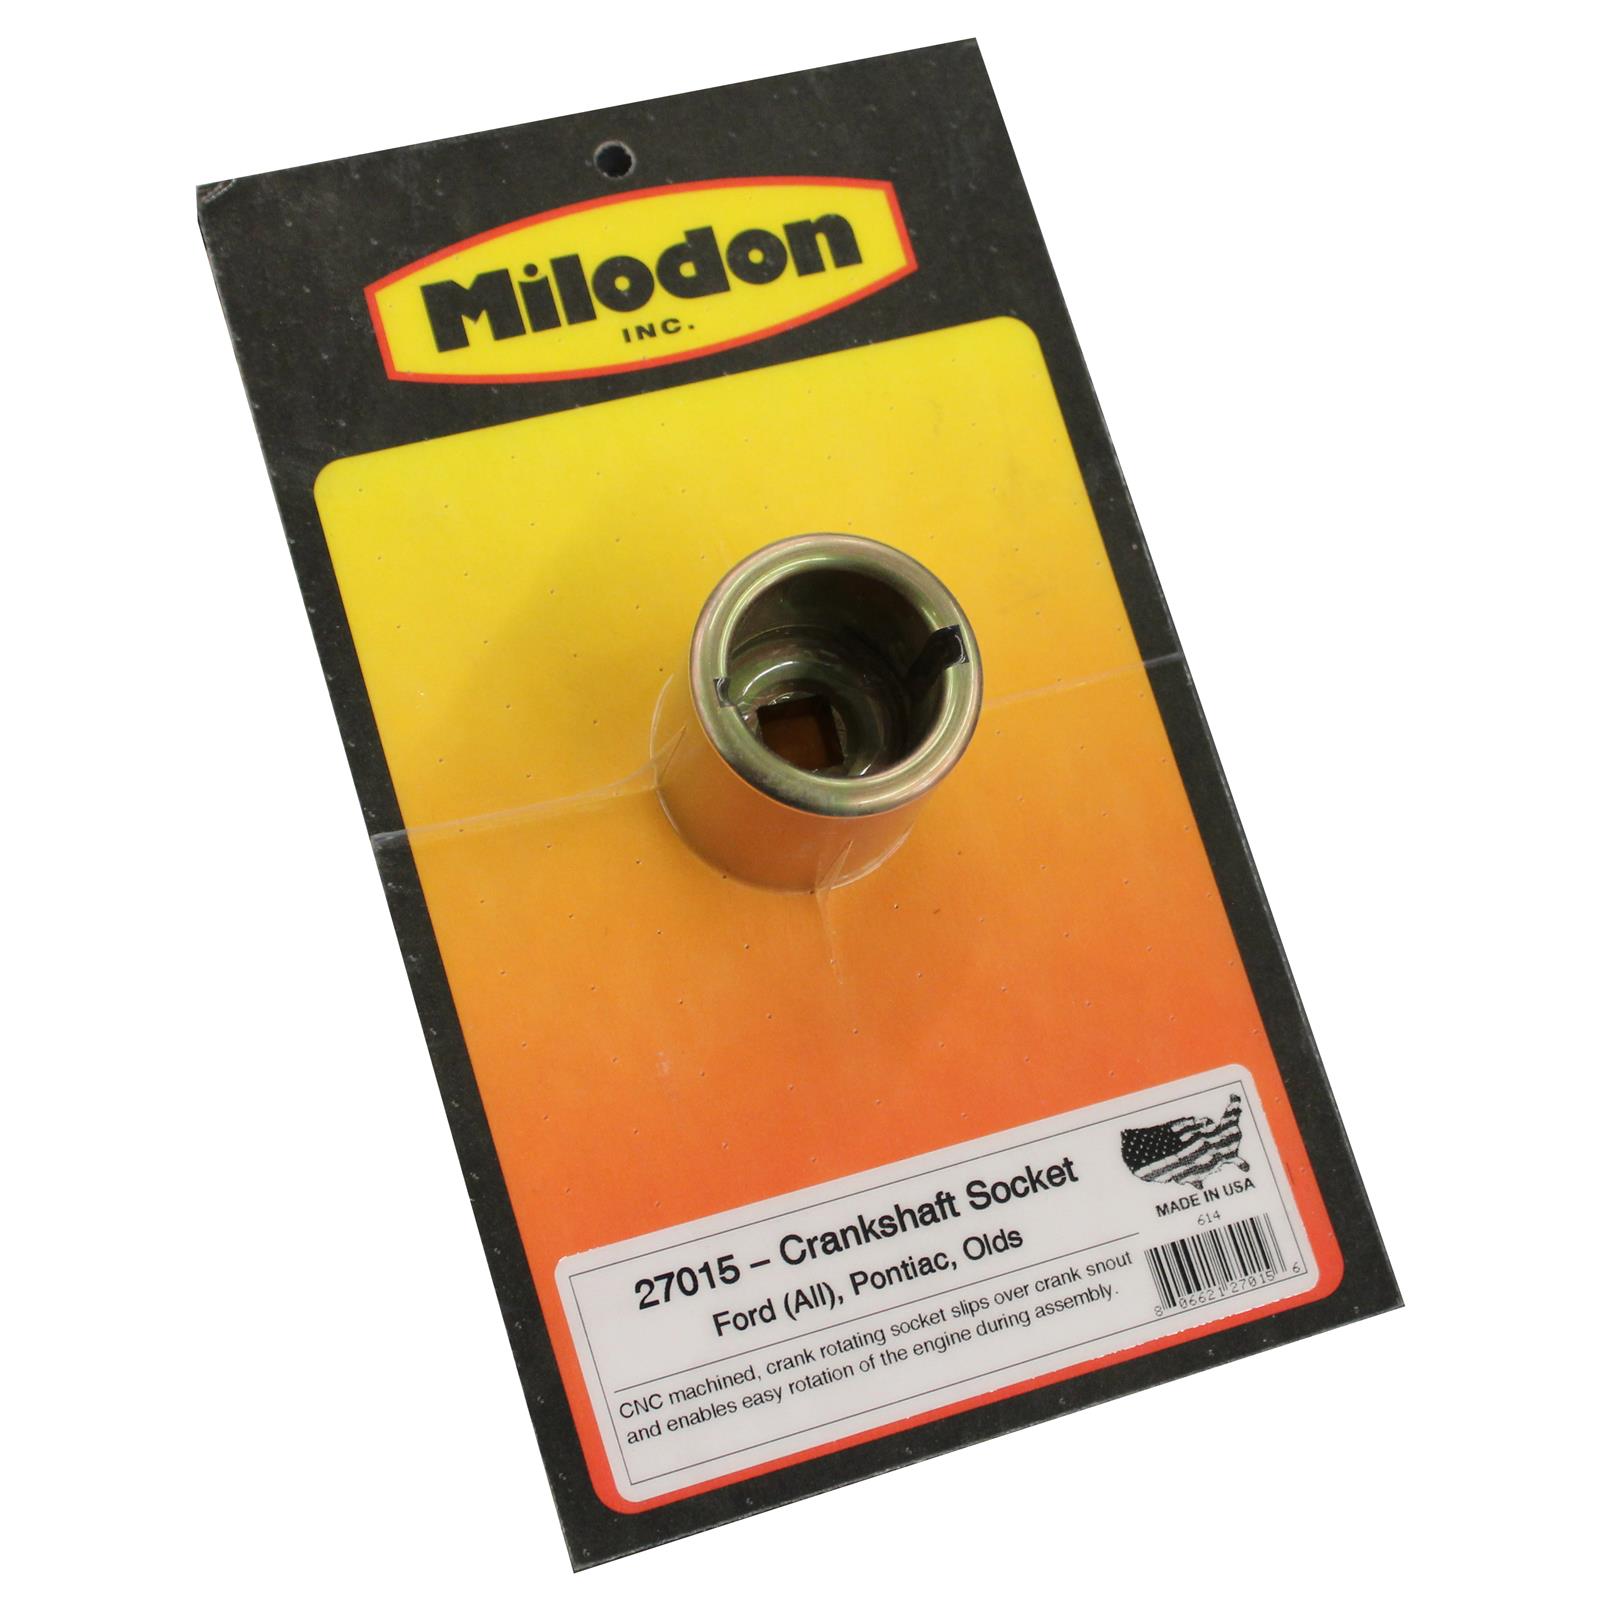 Milodon Ford Crank Socket 27015